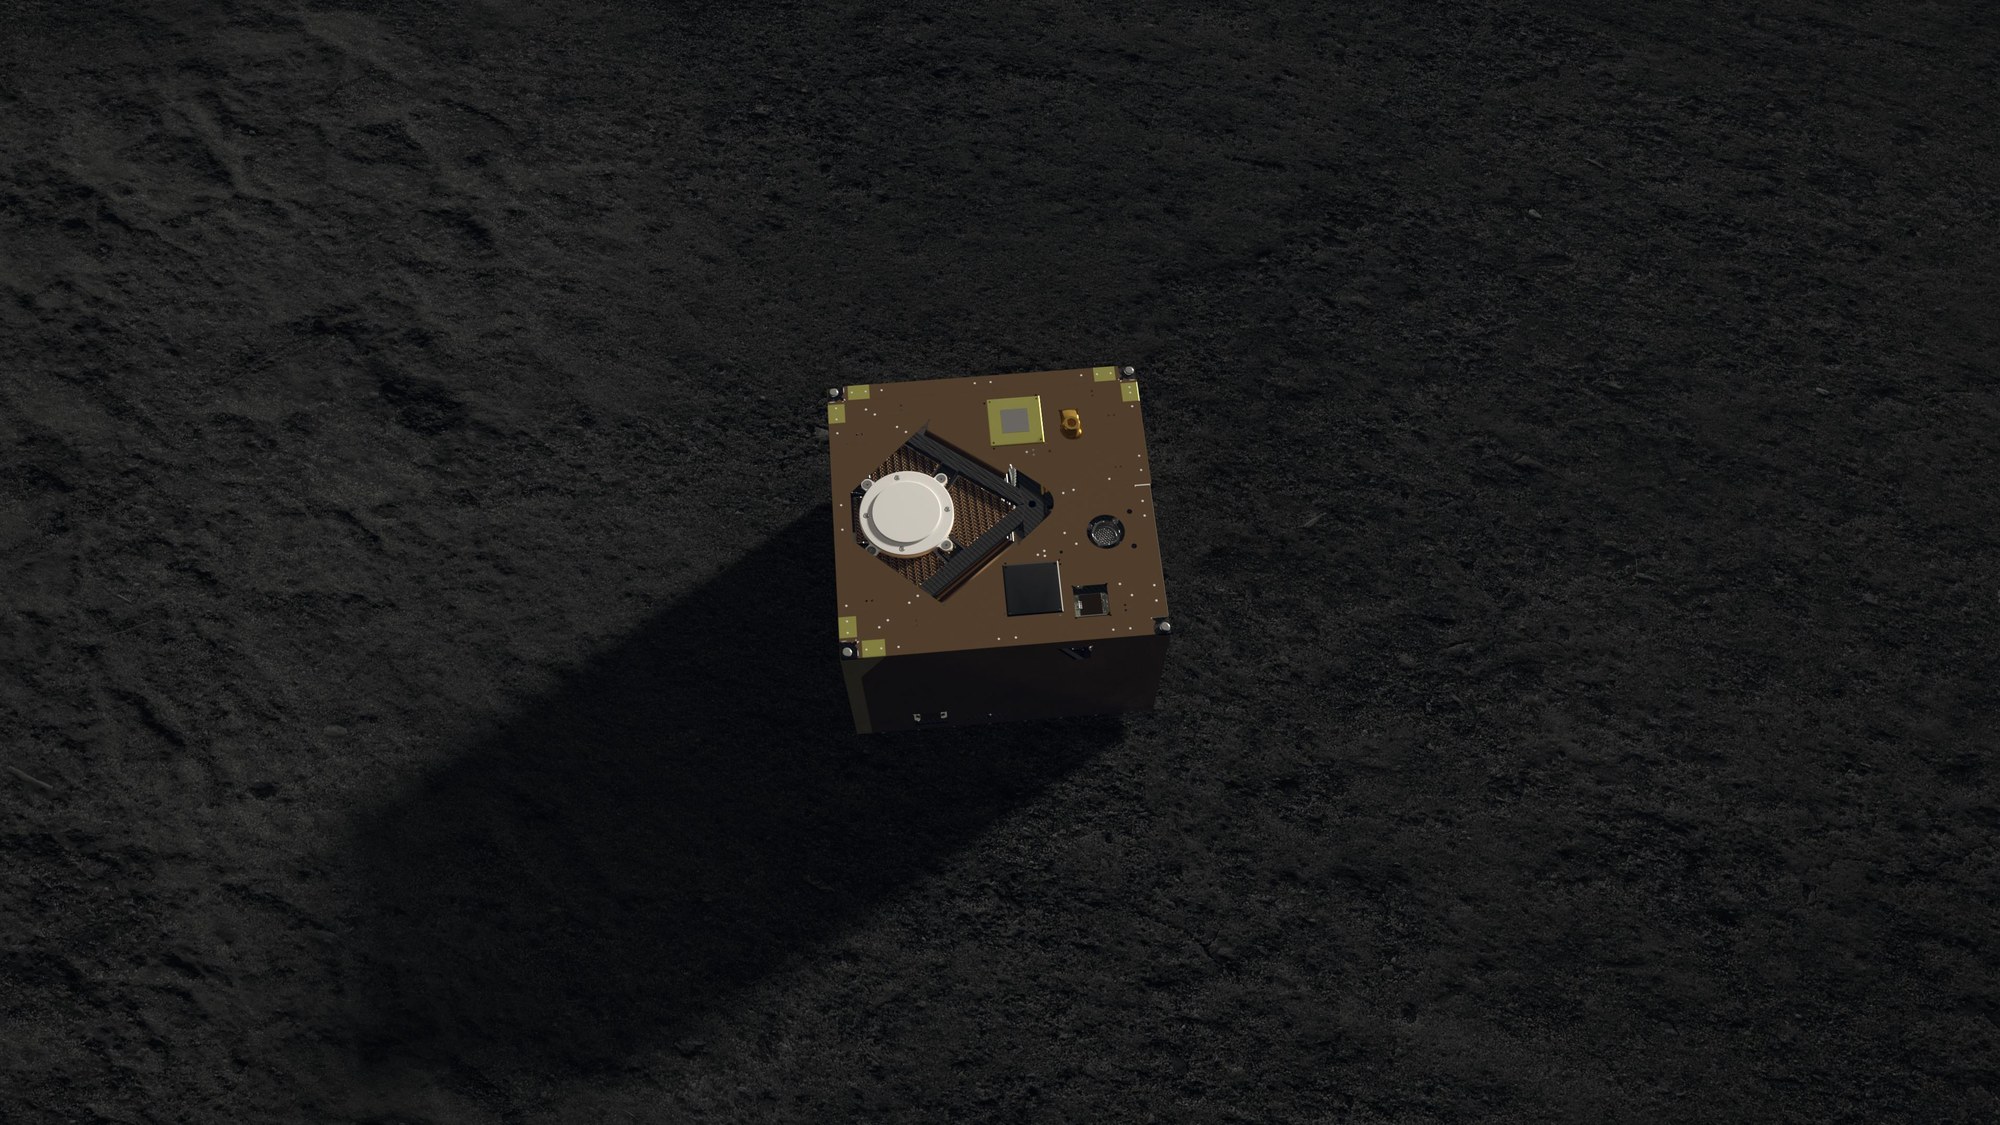 MASCOT asteroid lander